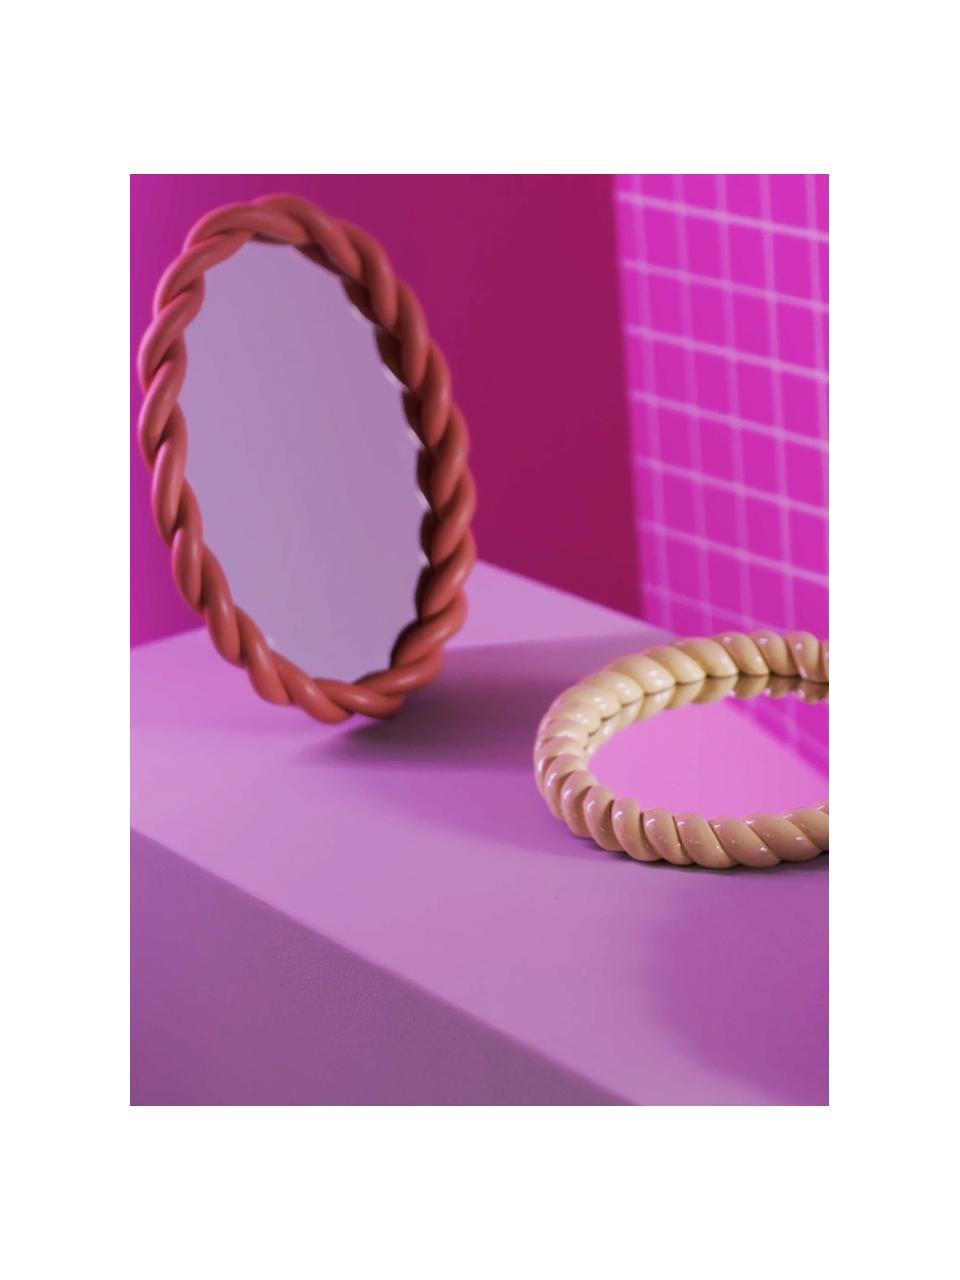 Espejo de pared ovalado Braid, Espejo: cristal, Rosa palo, An 26 x Al 35 cm